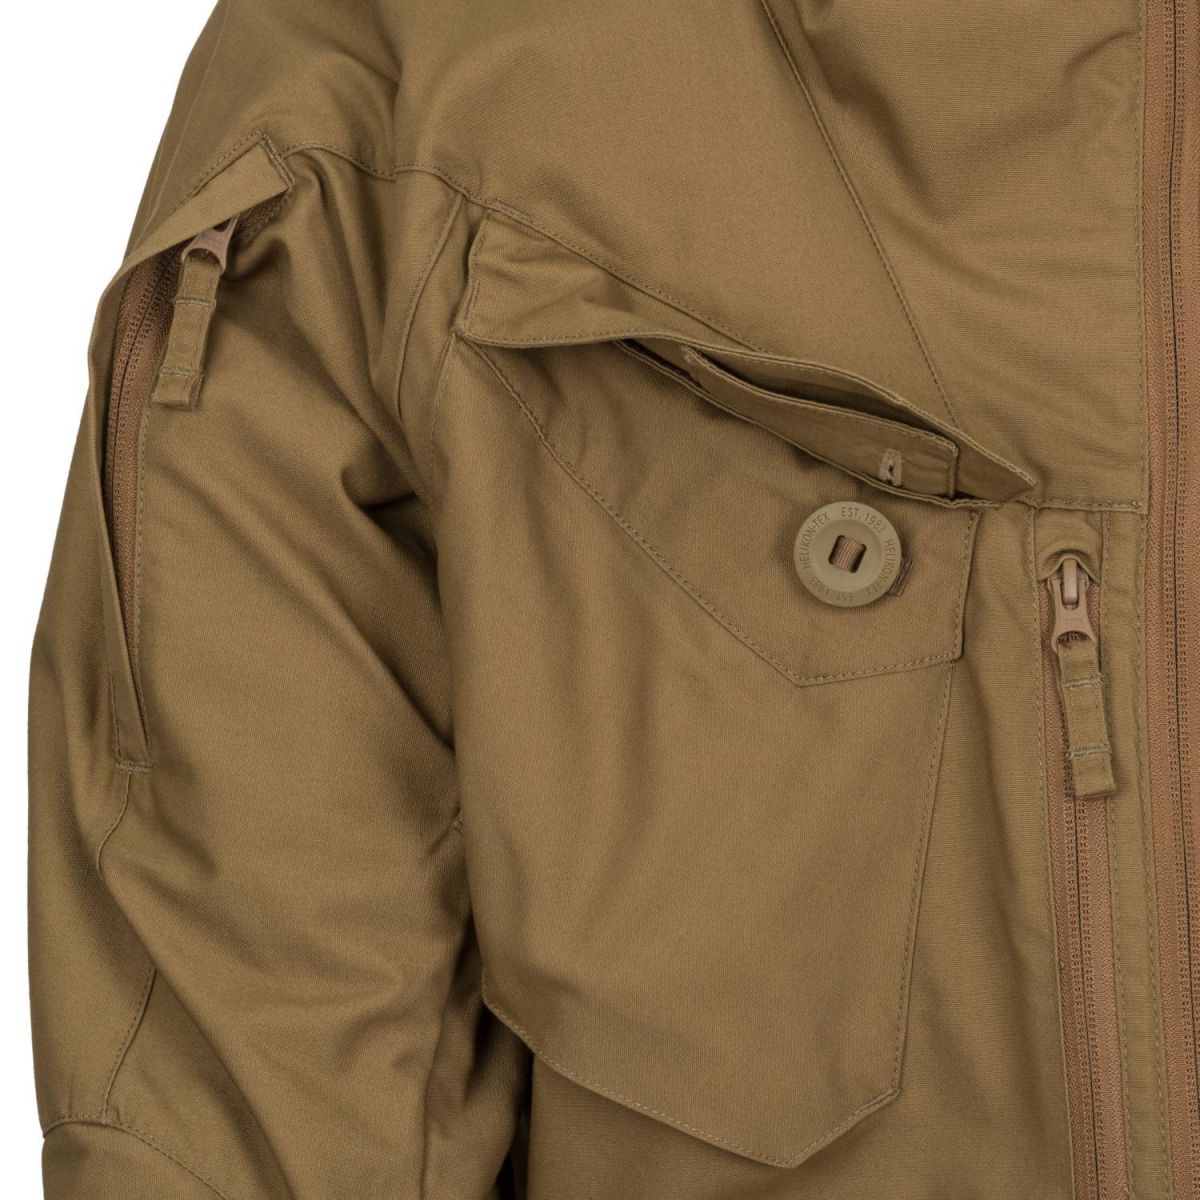 Куртка анорак Helikon-Tex Pilgrim. Цвет Coyote / Койот 7